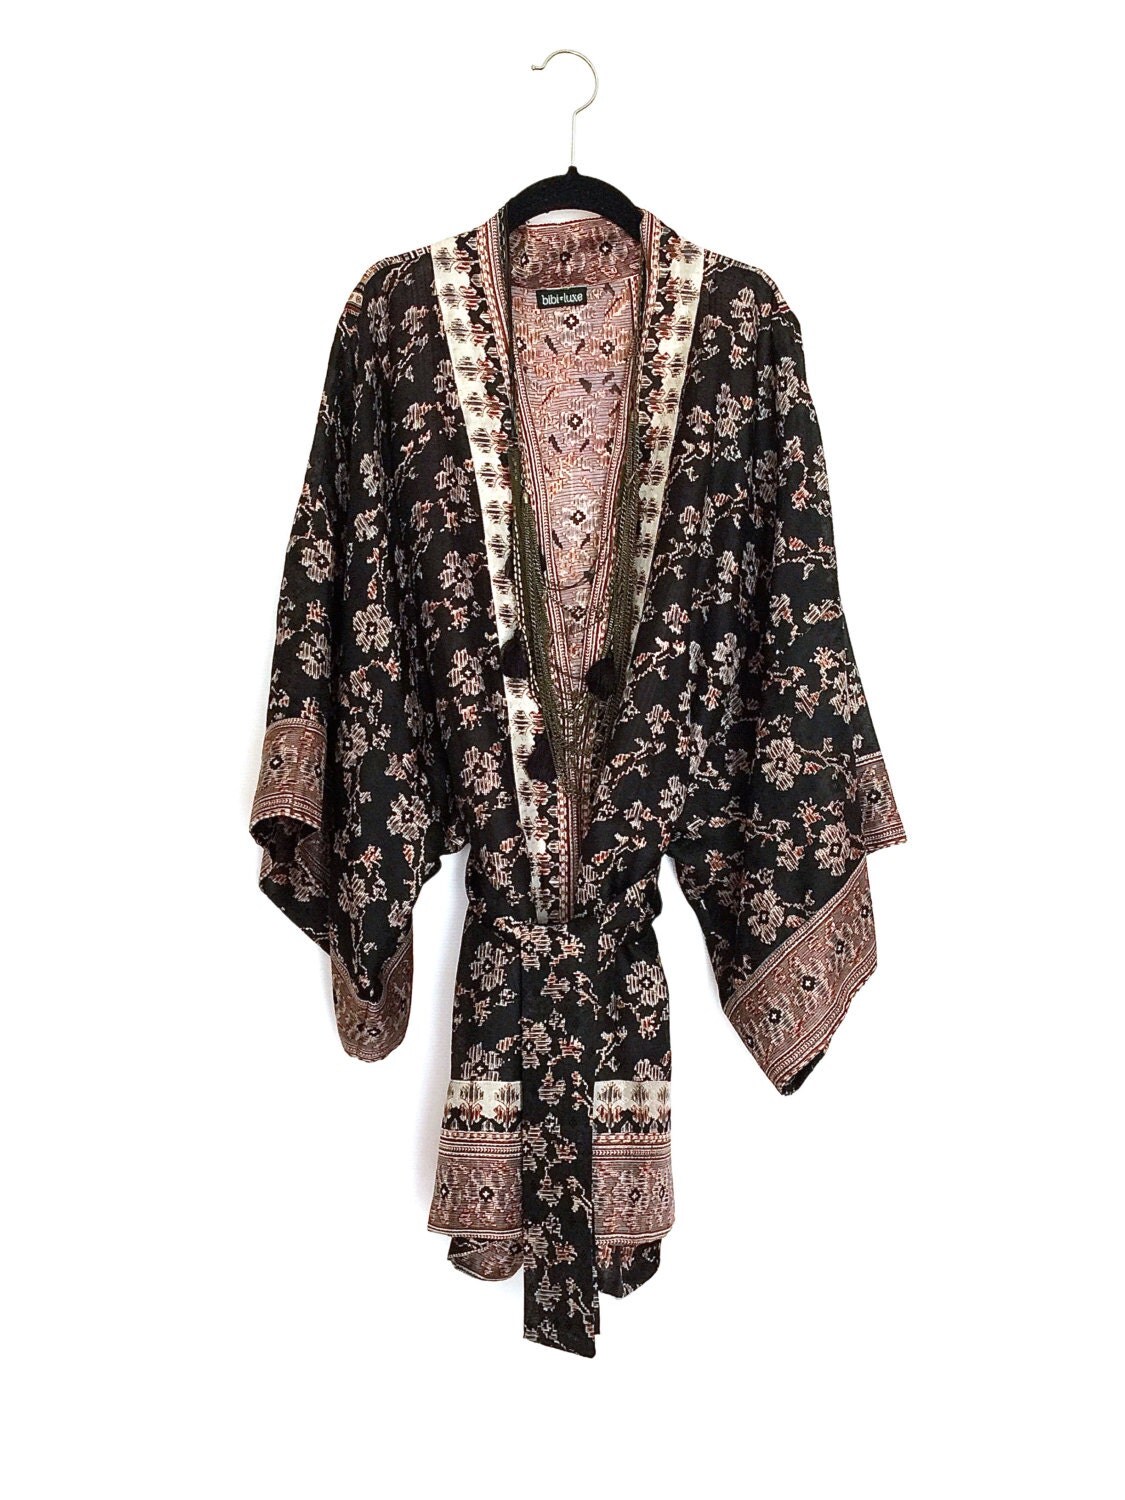 Silk Kimono jacket oversized wide sleeve style in black and